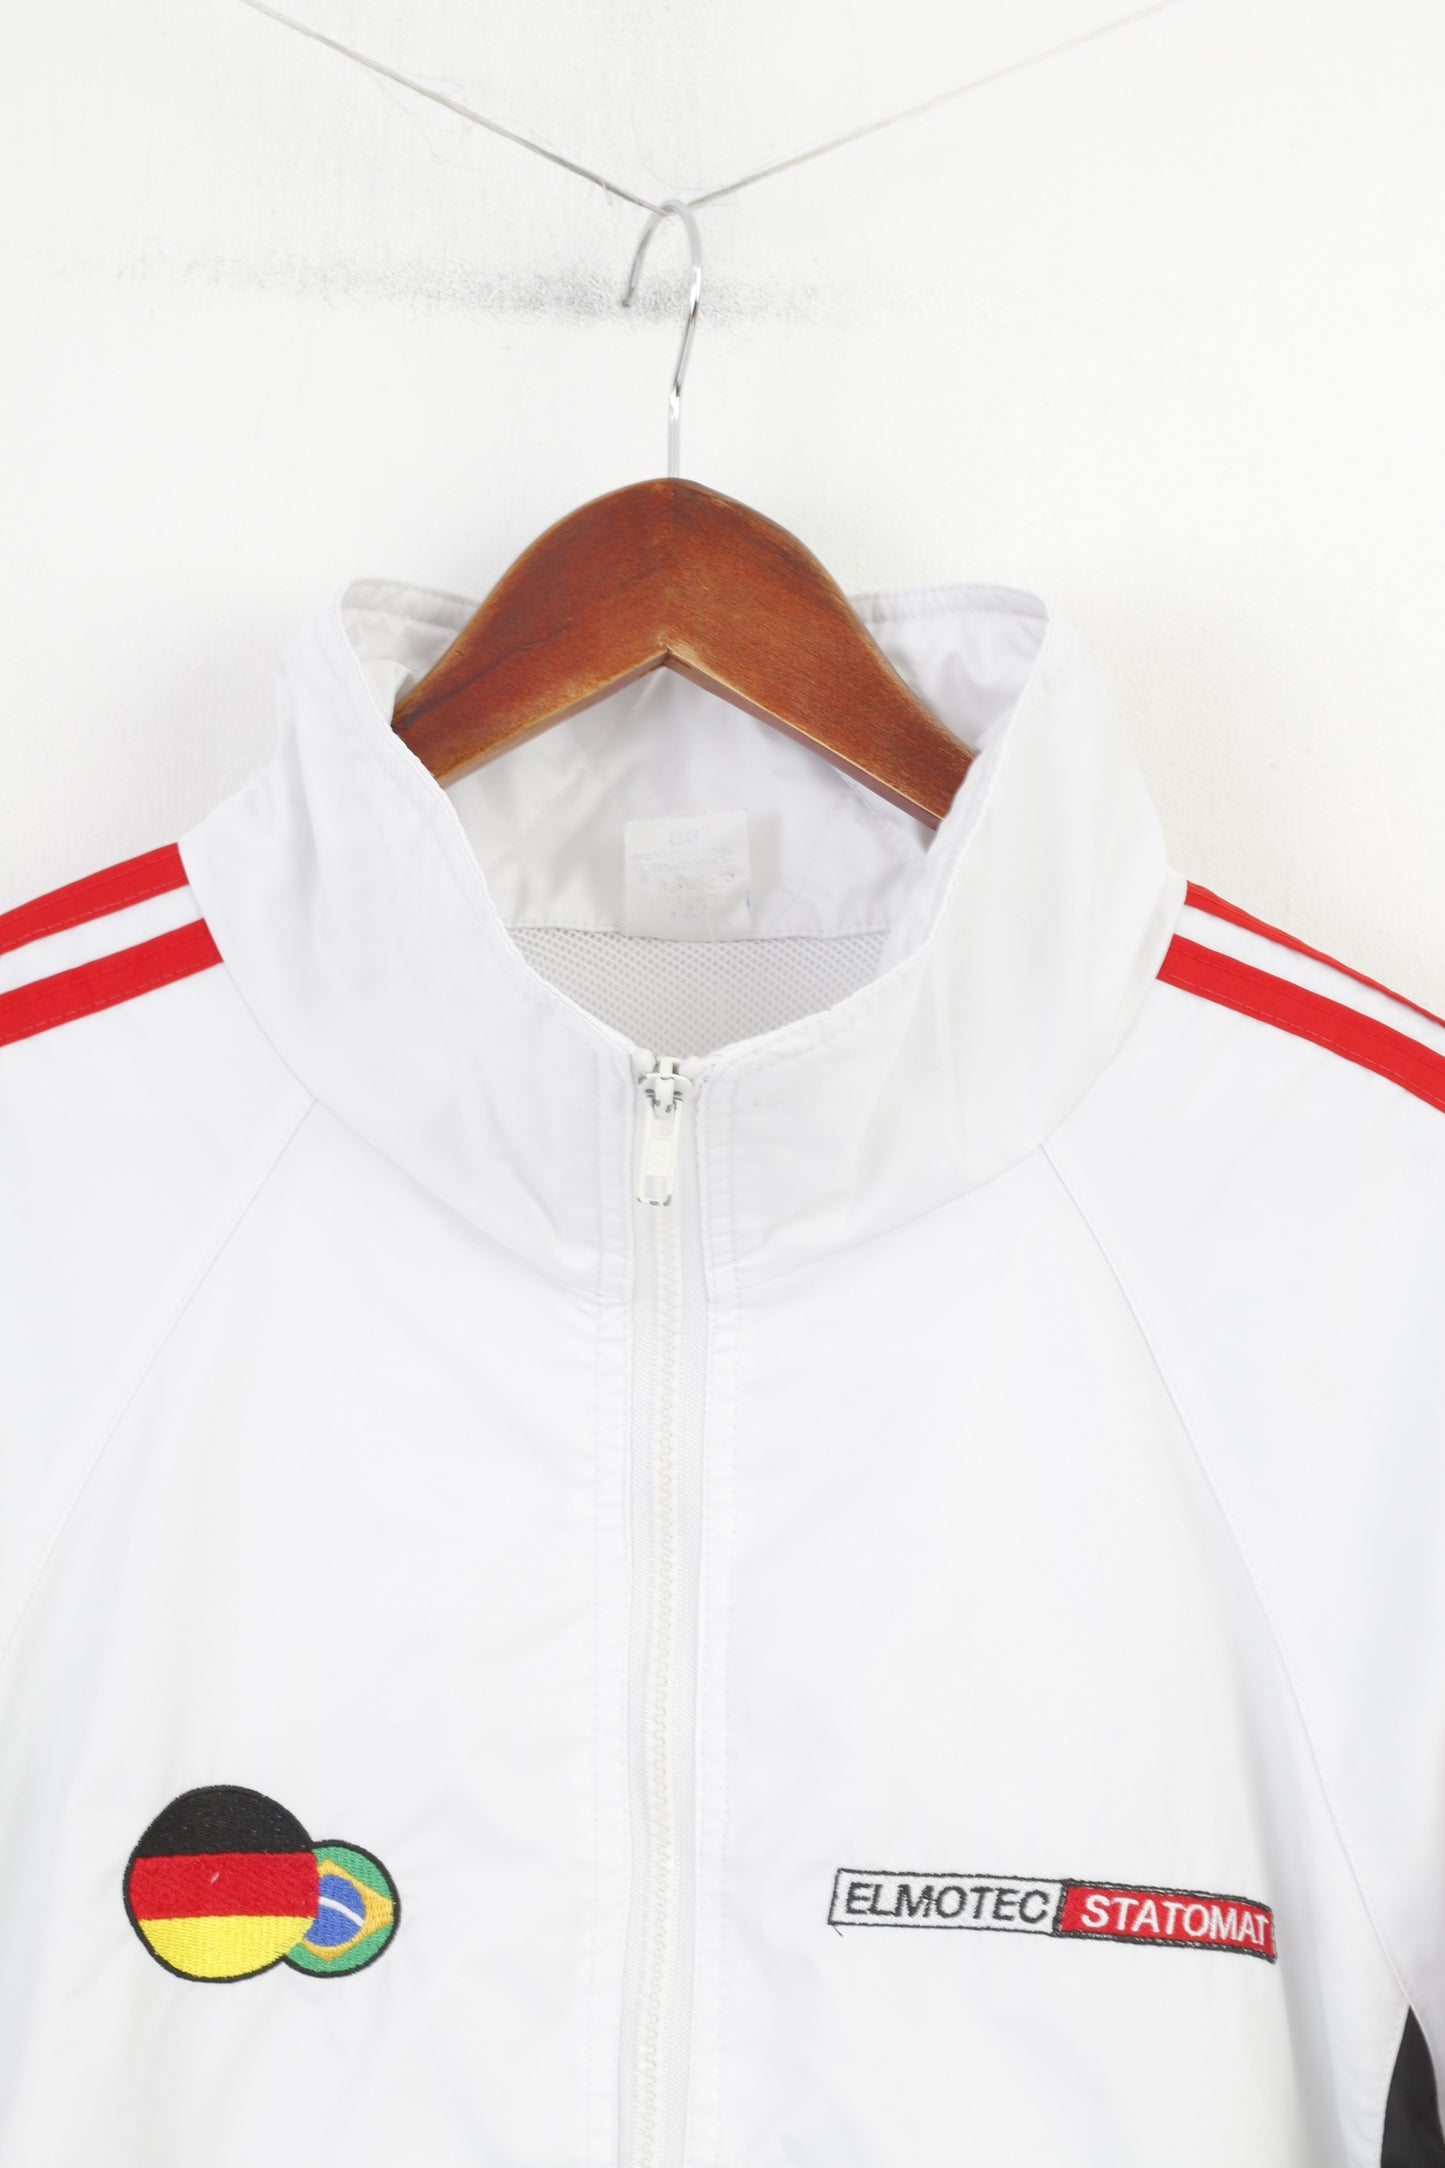 Esporte Men XL Jacket White Vintage Lightweight Full Zipper Sportswear Top